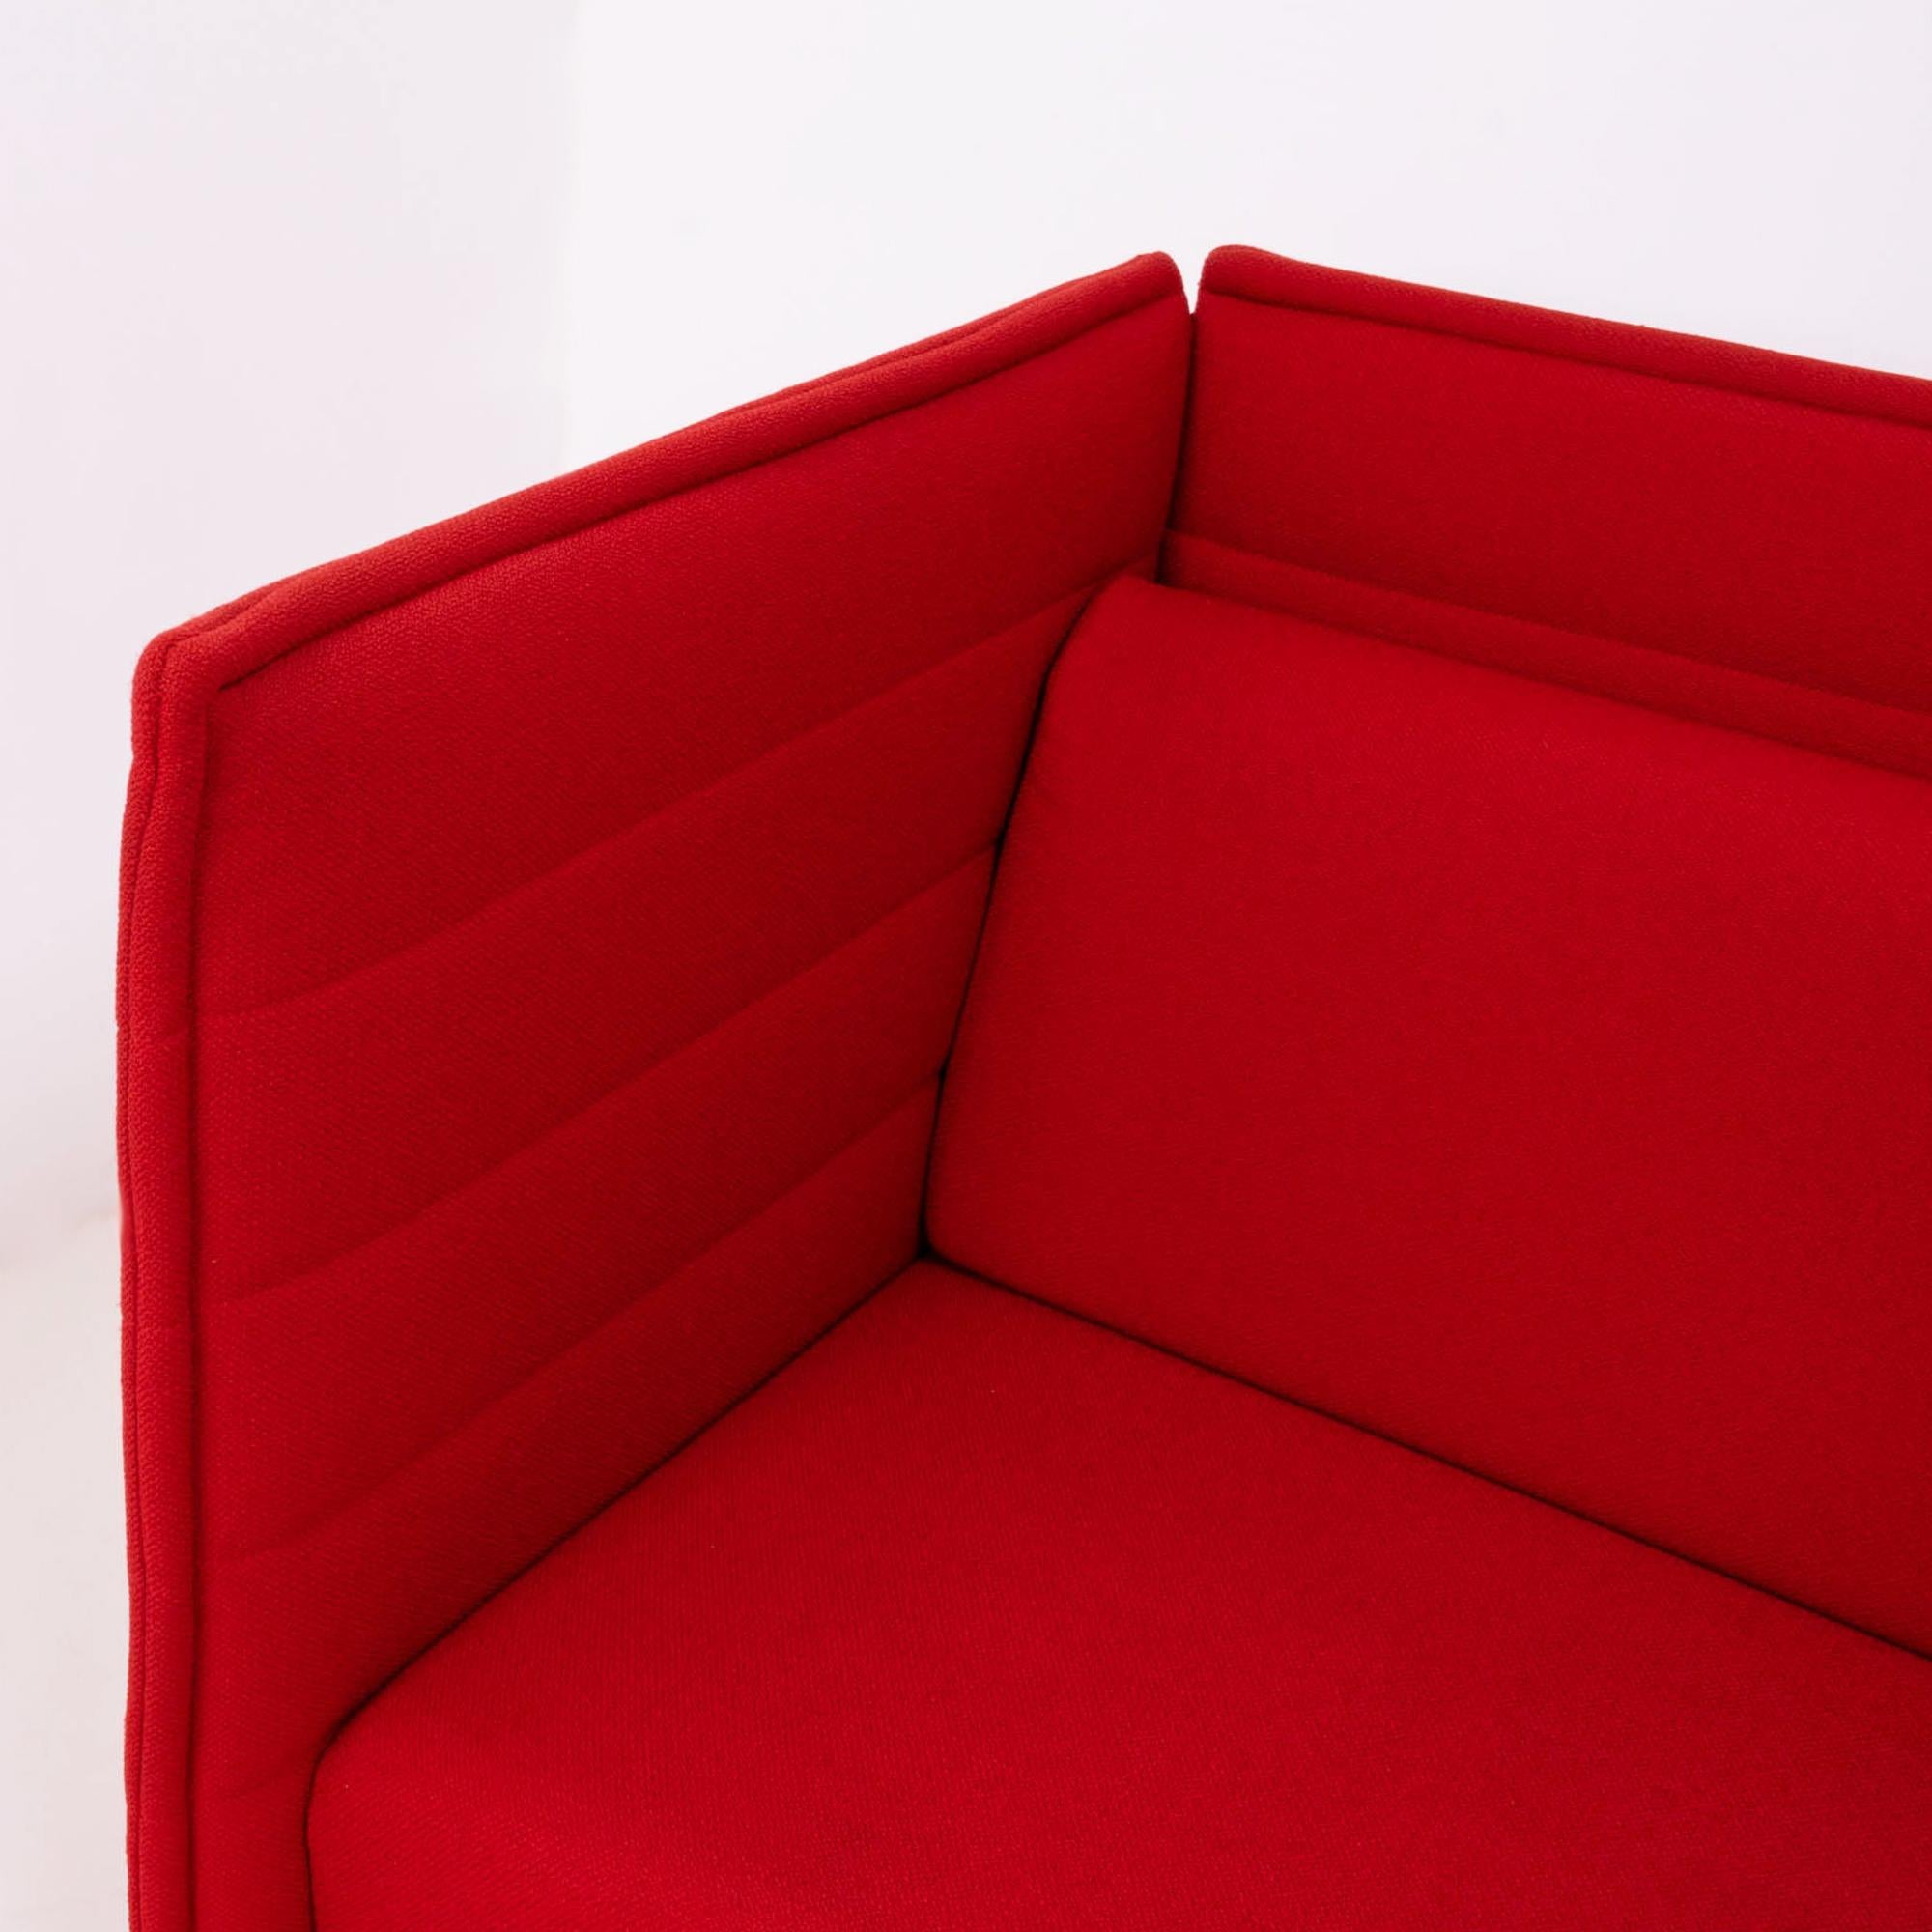 Steel Vitra Alcove Red Loveseat Sofa by Ronan & Erwan Bouroullec